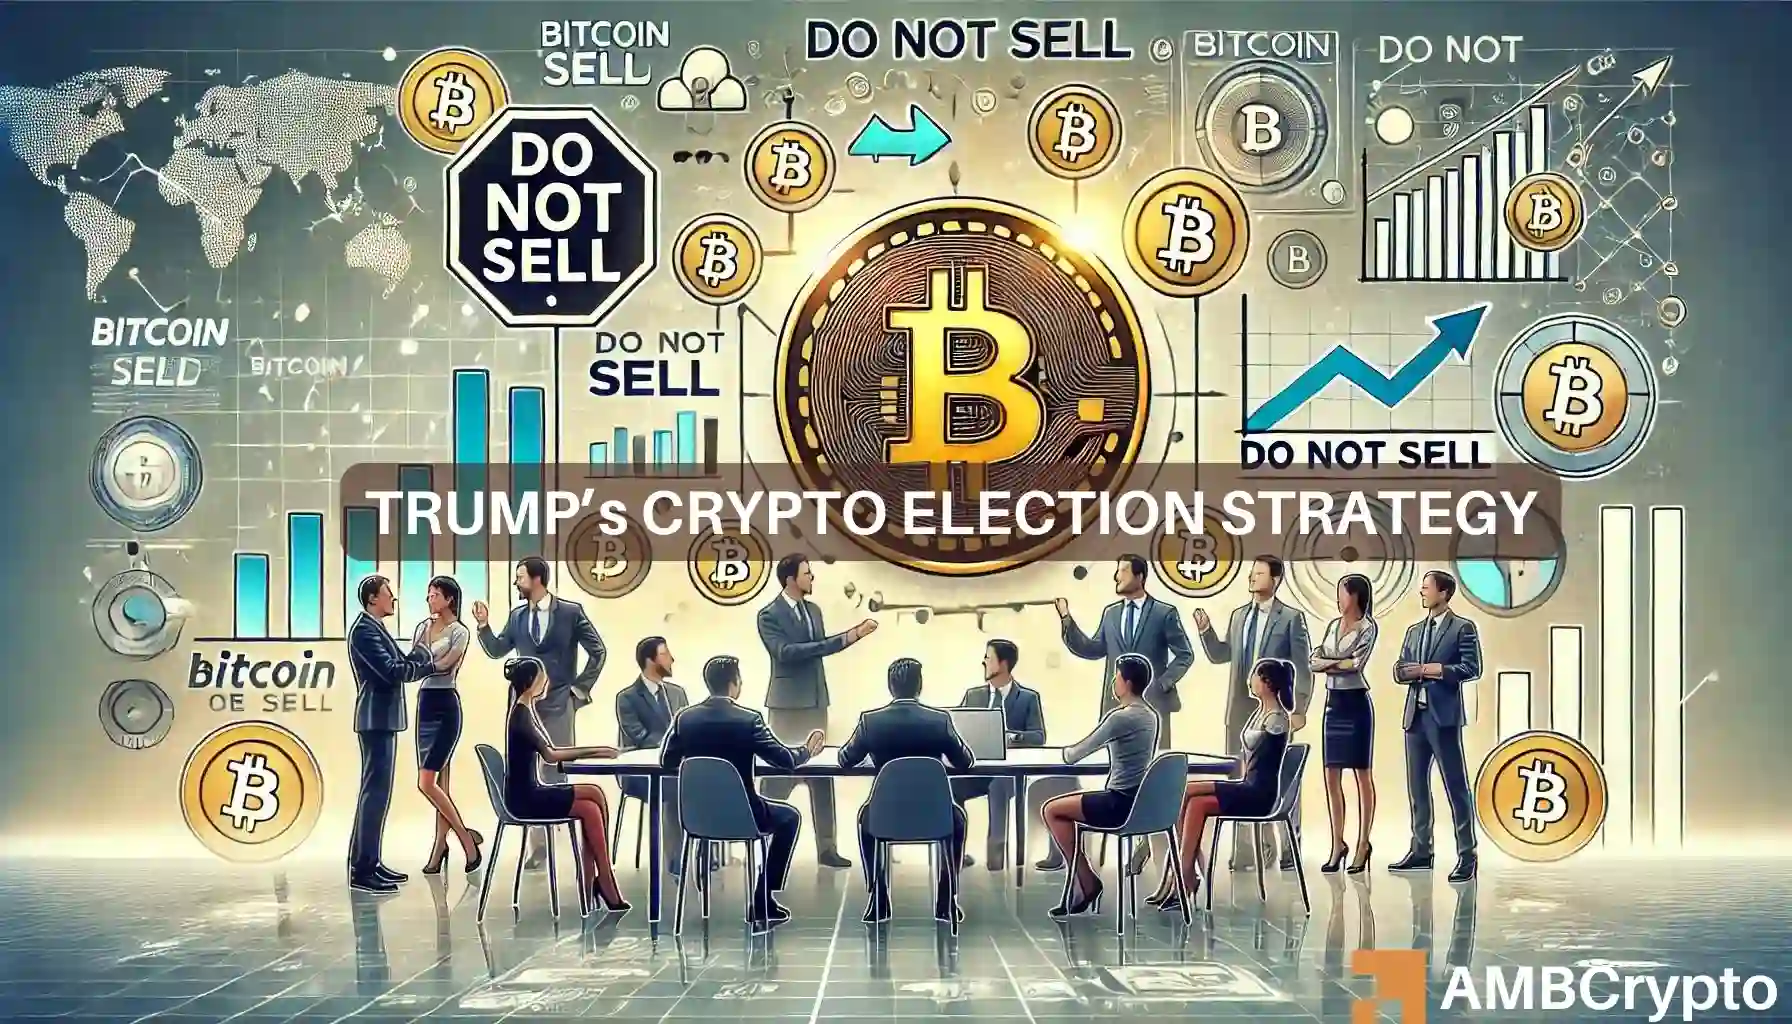 Trump’s crypto election strategy